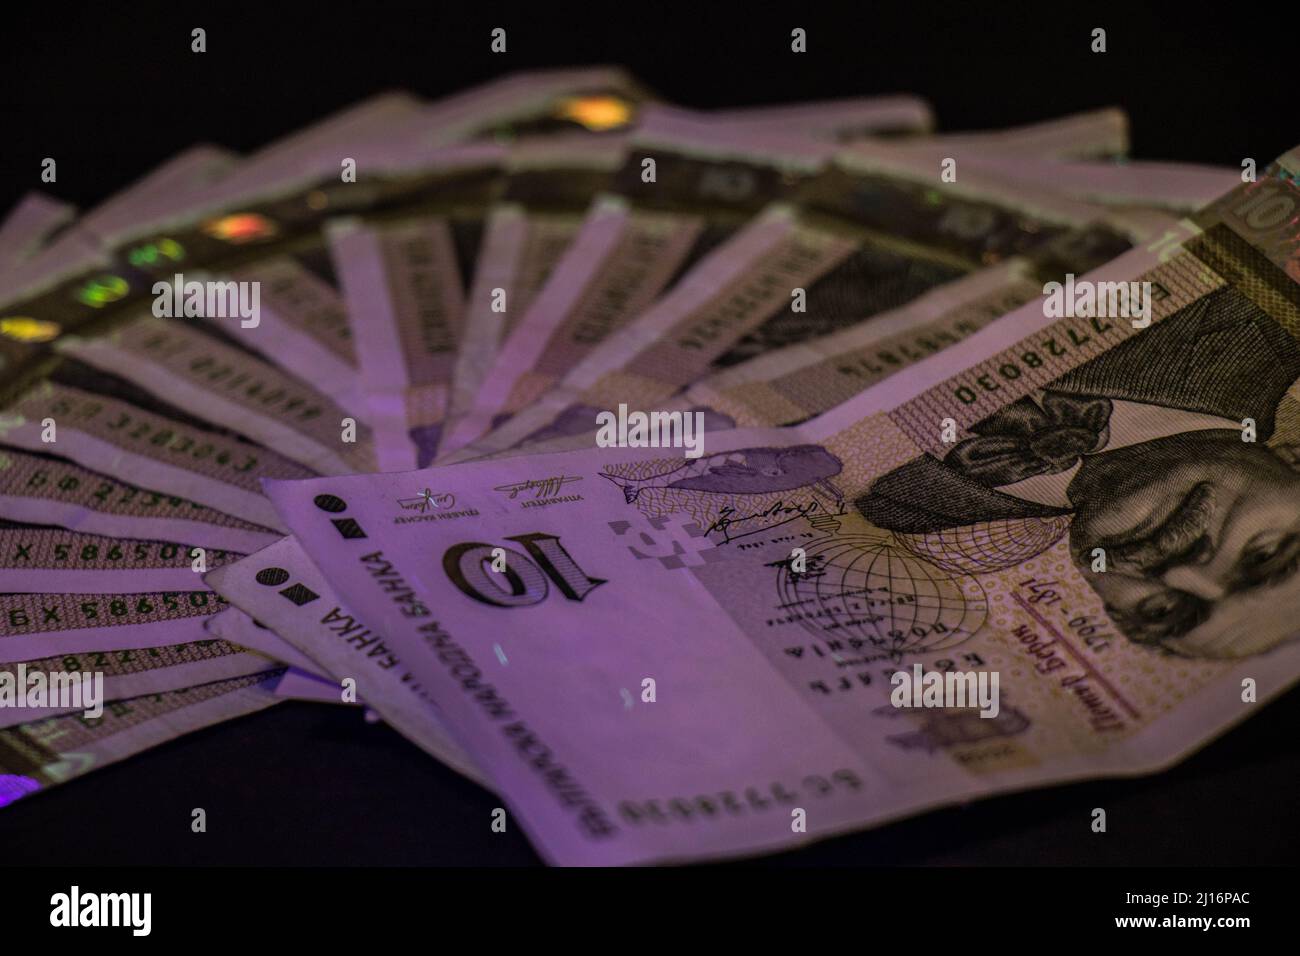 Bulgarian currency bills under an UV light Stock Photo